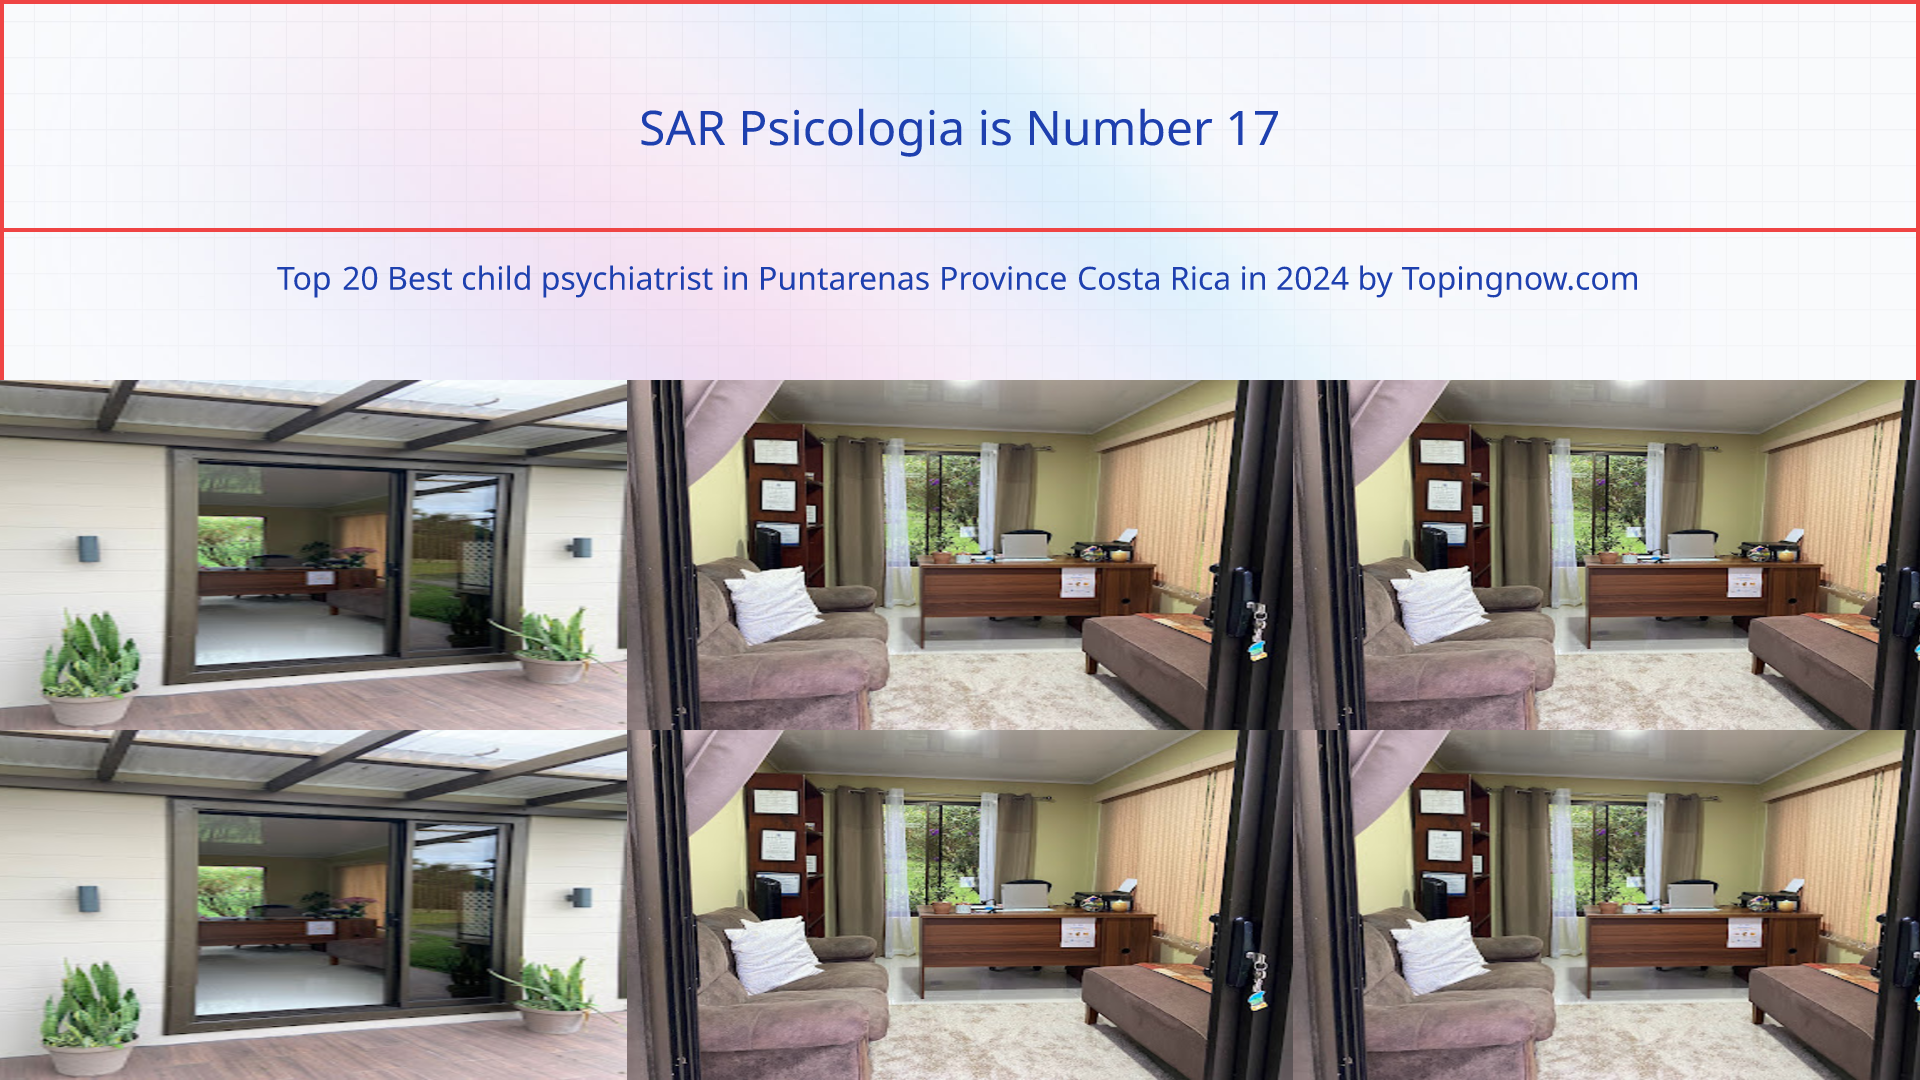 SAR Psicologia: Top 20 Best child psychiatrist in Puntarenas Province Costa Rica in 2024